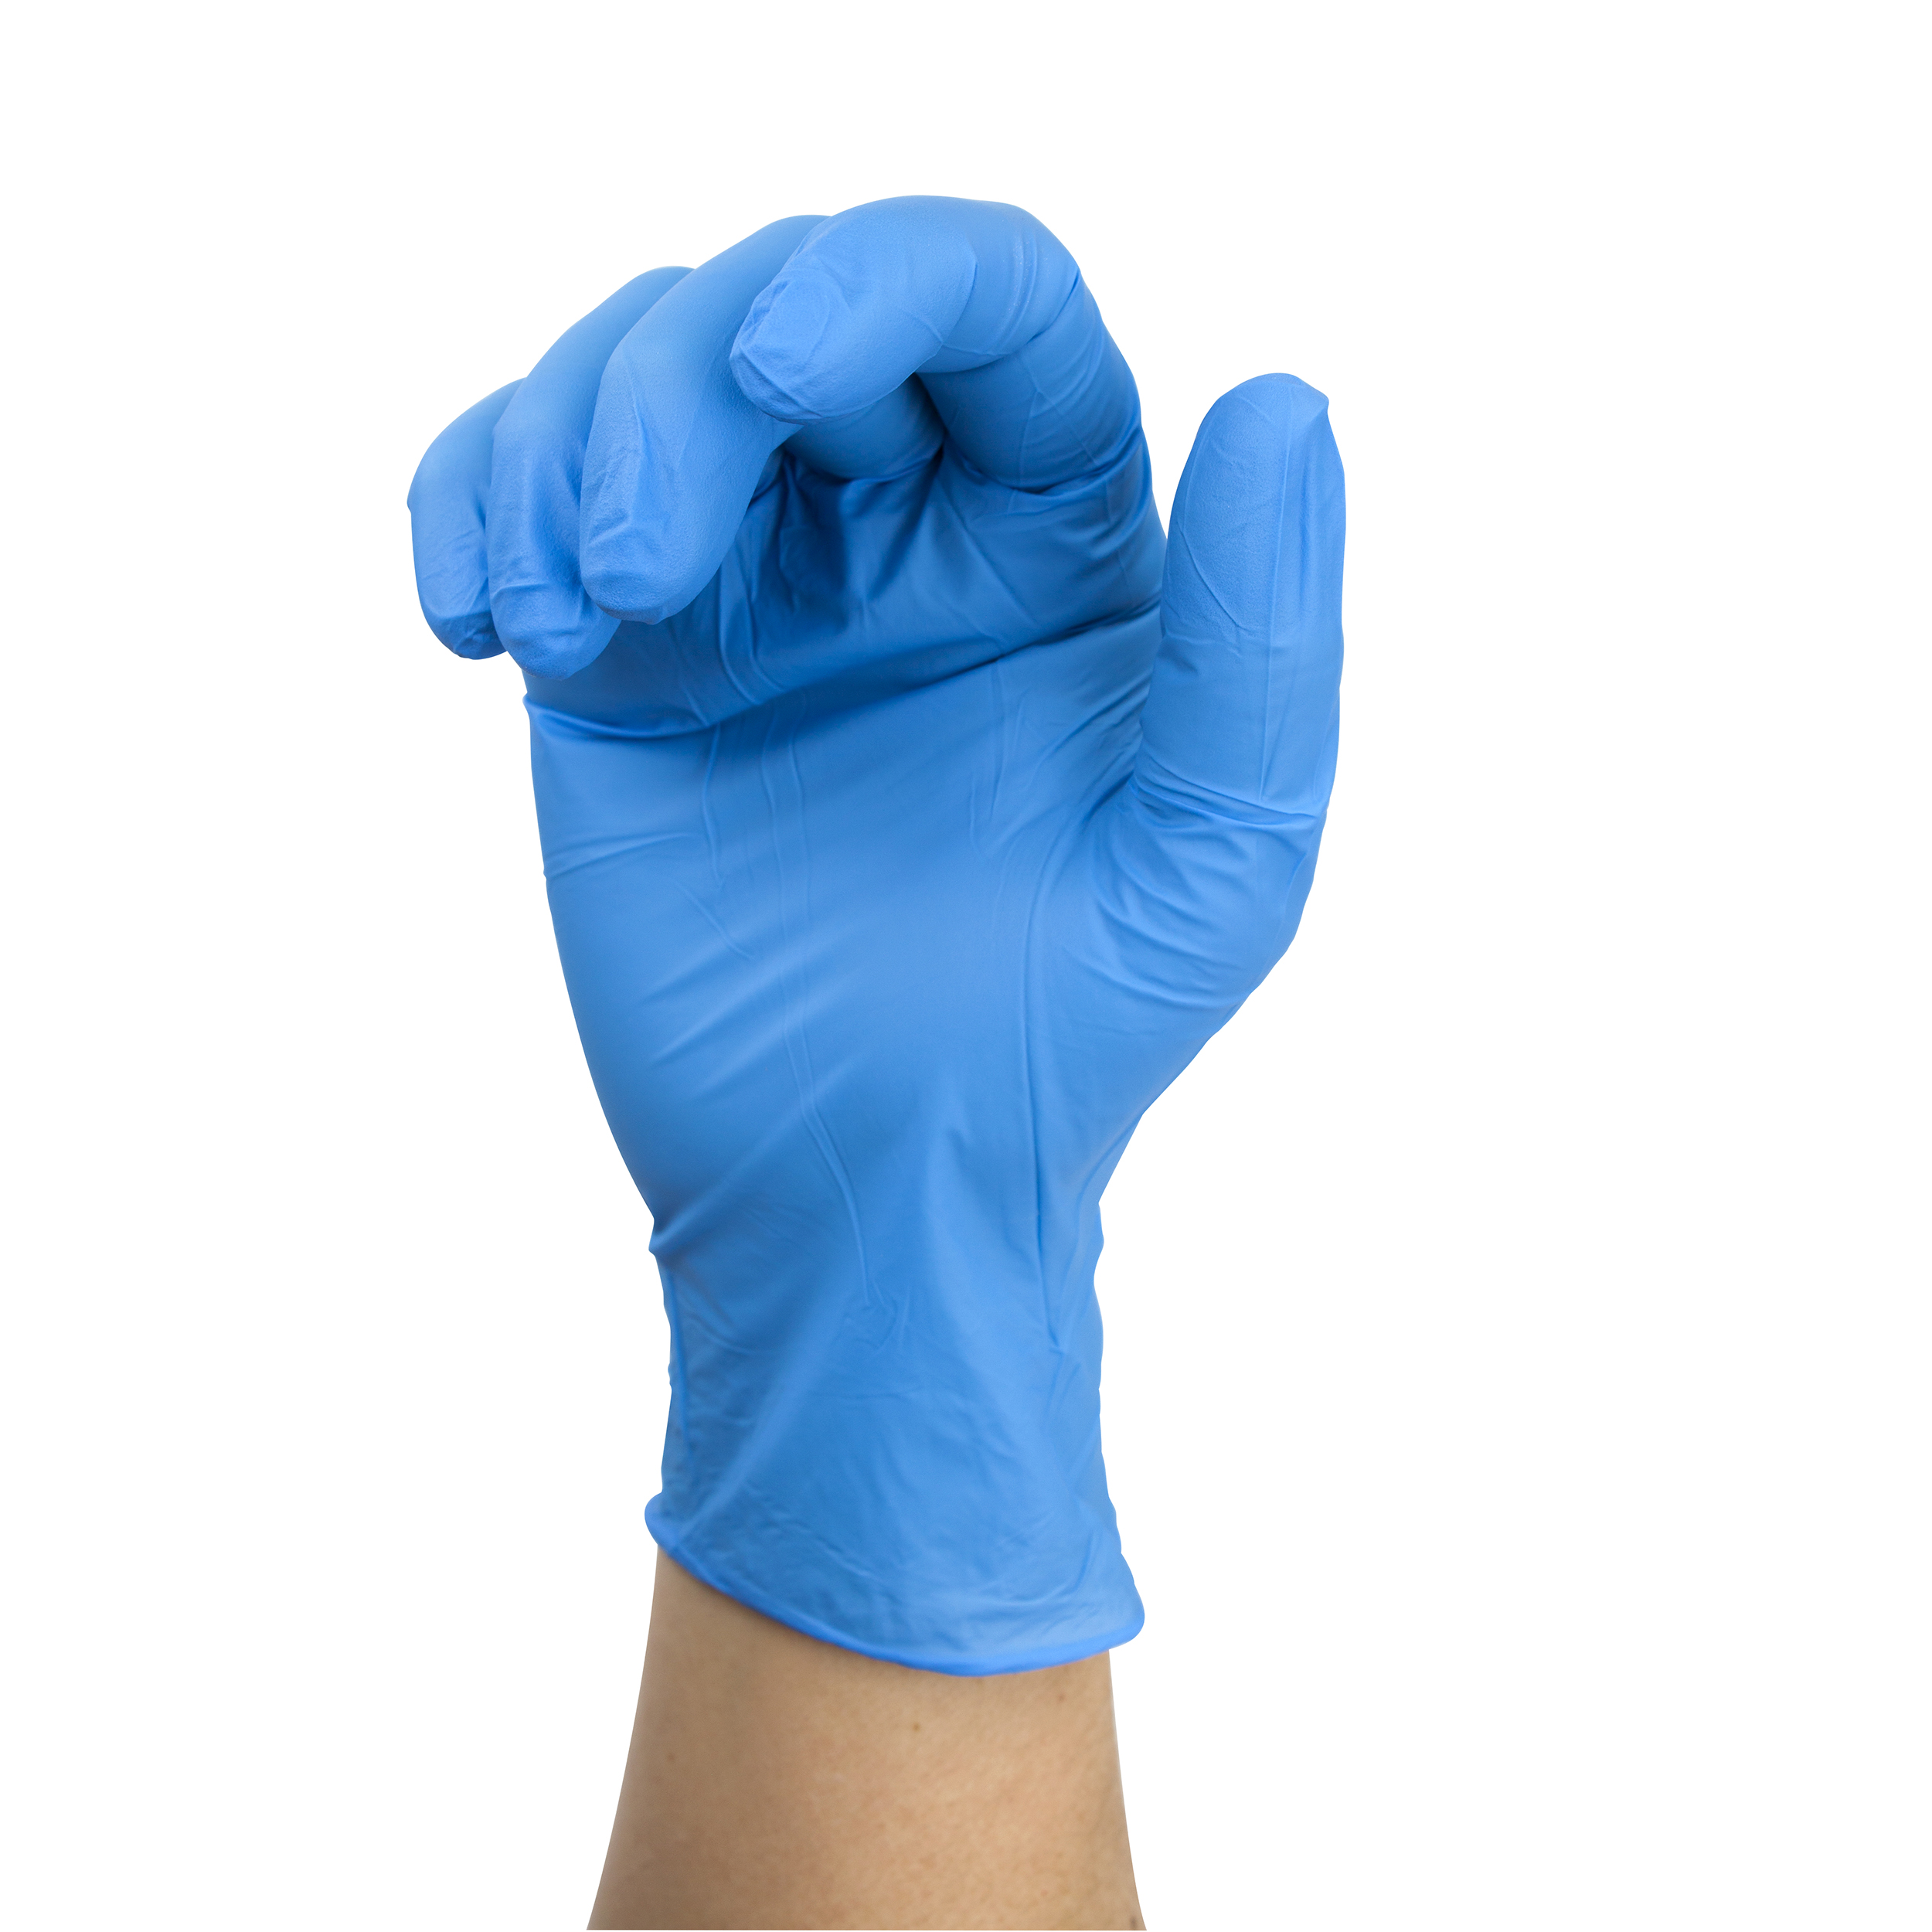 Nitrile Exam Glove (Non-latex) Powder Free - Xl - Blue - Box of 100